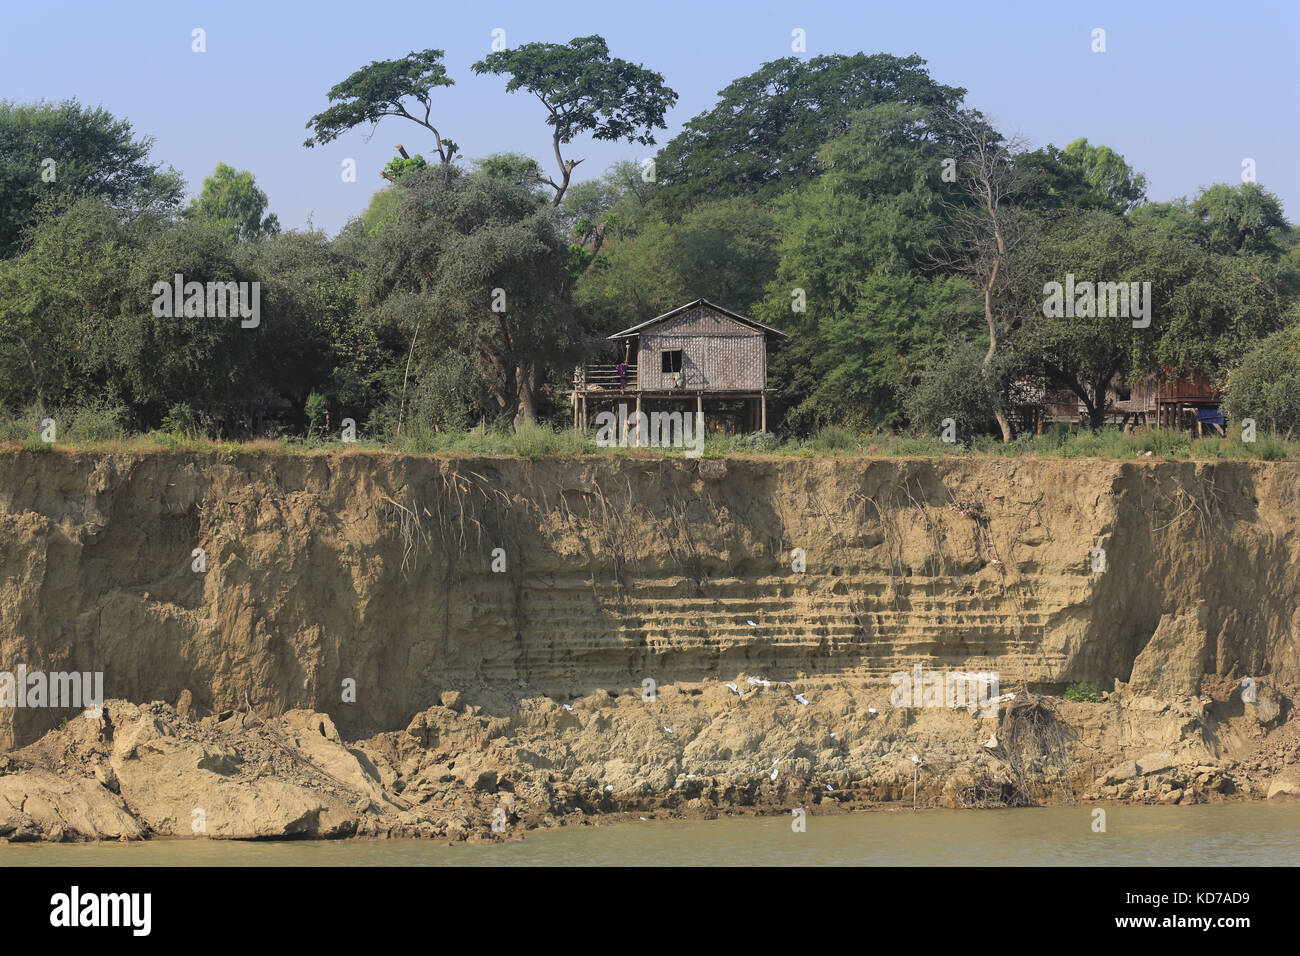 Häuser in Kon zaung Dorf neben dem Erodieren Banken des Irrawaddy Flusses in Myanmar (Burma). Stockfoto